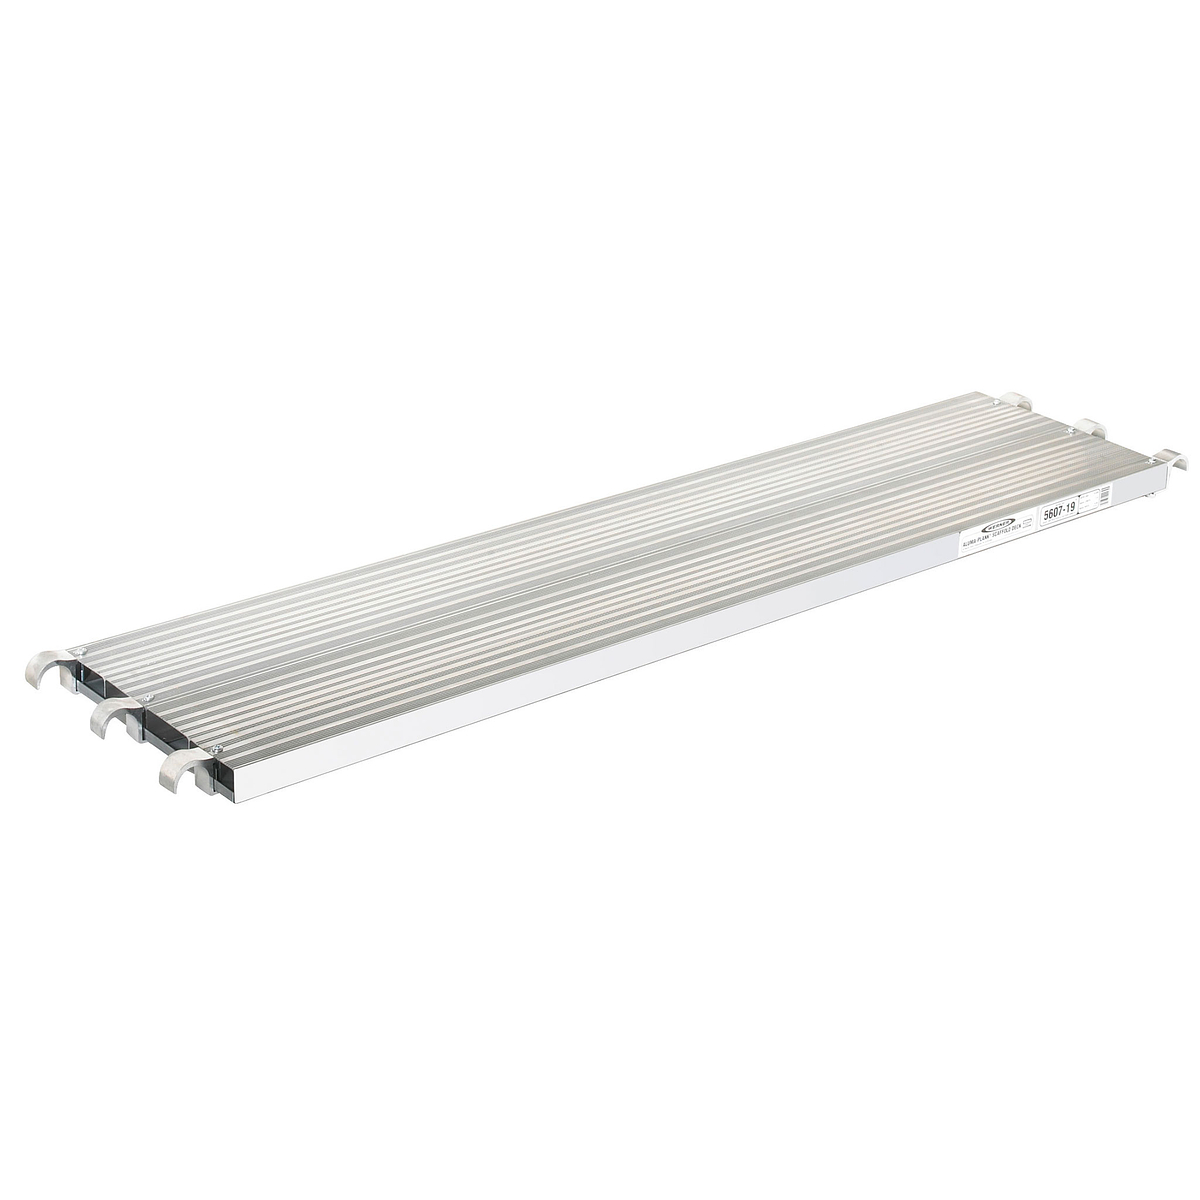 Recovery Board Aluminum H-1300, 44 cm wide x 130 cm long - GTV-VAN